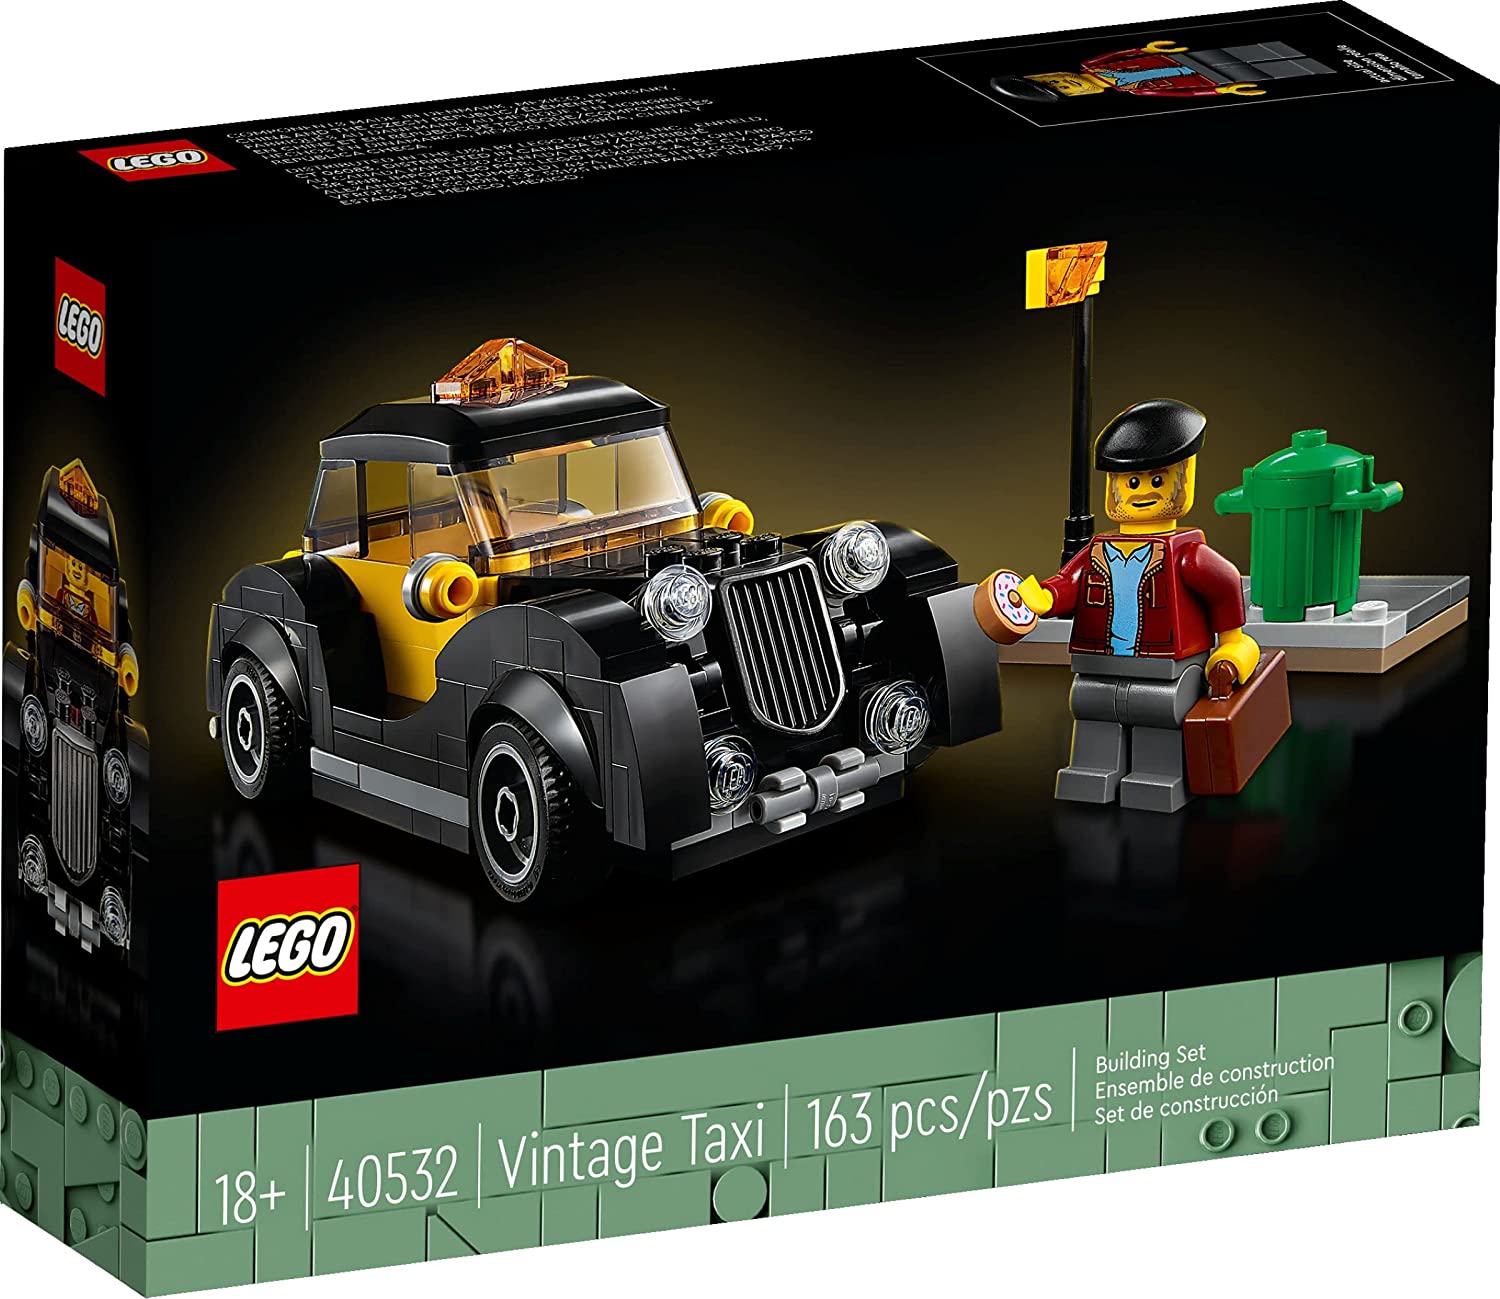 Immagine relativa a LEGO Set 40532 Oldtimer-Taxi